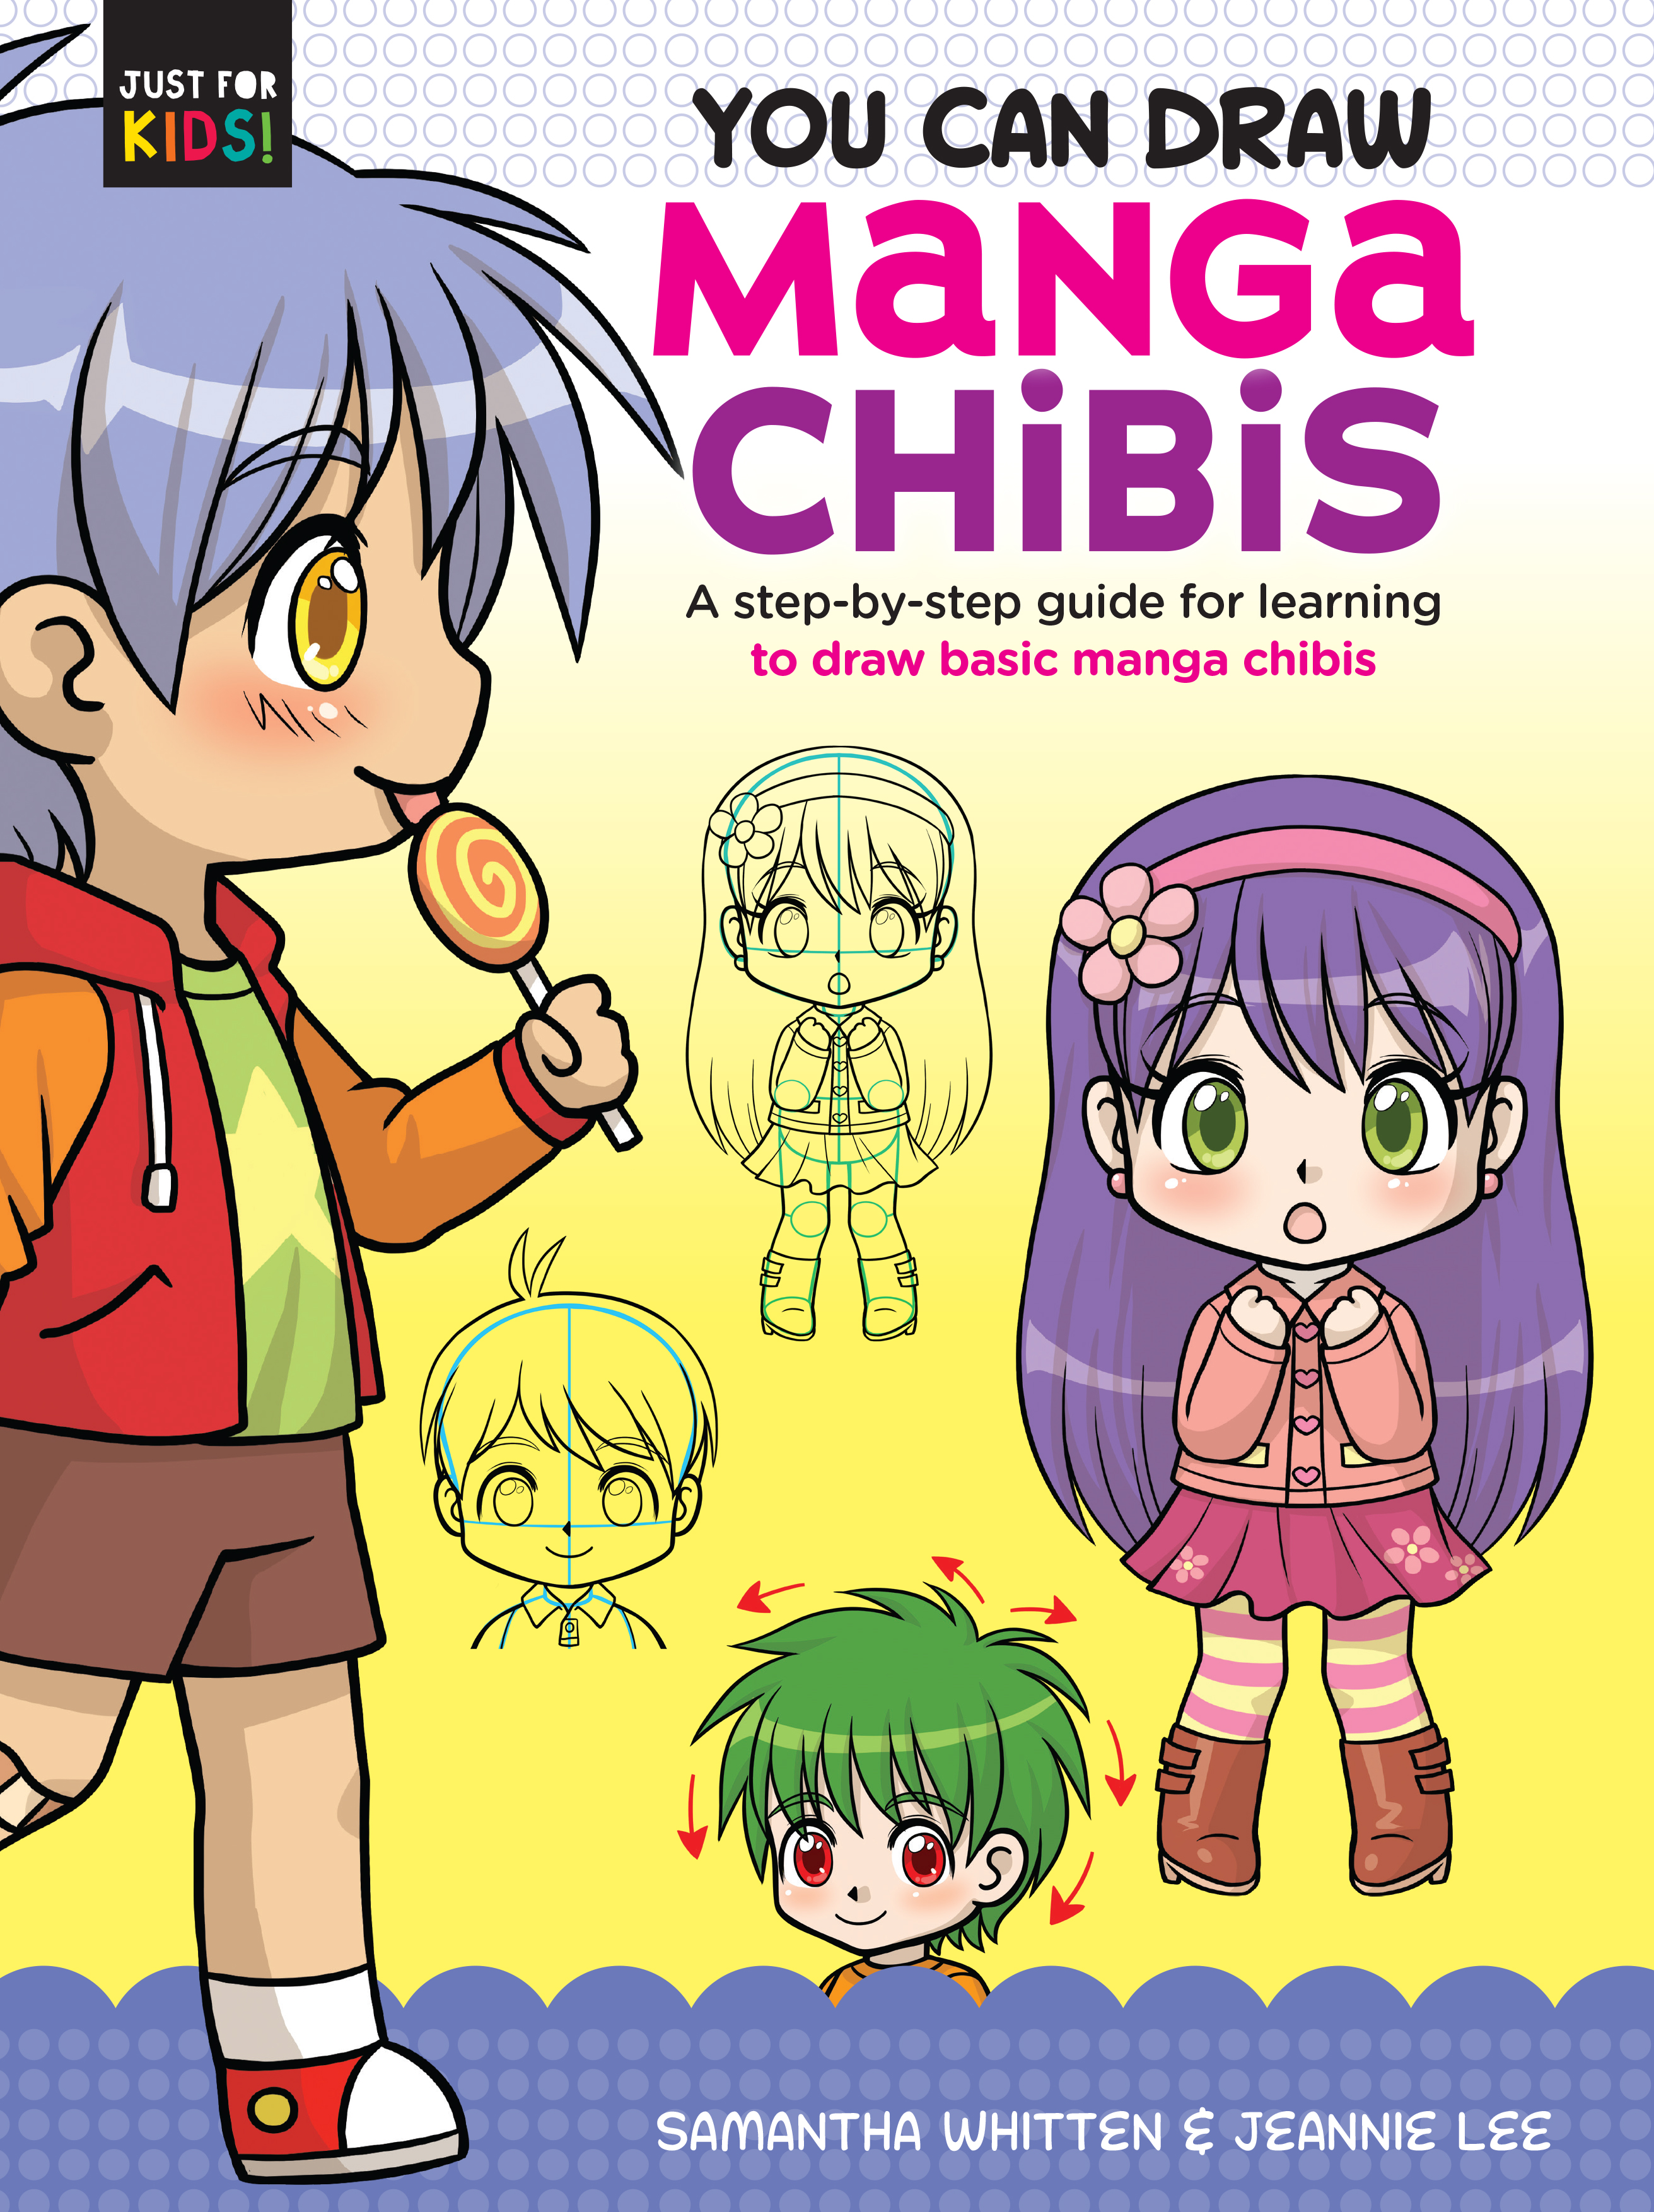 How to Draw a Chibi Girl Easy | Chibi girl drawings, Chibi, Chibi drawings